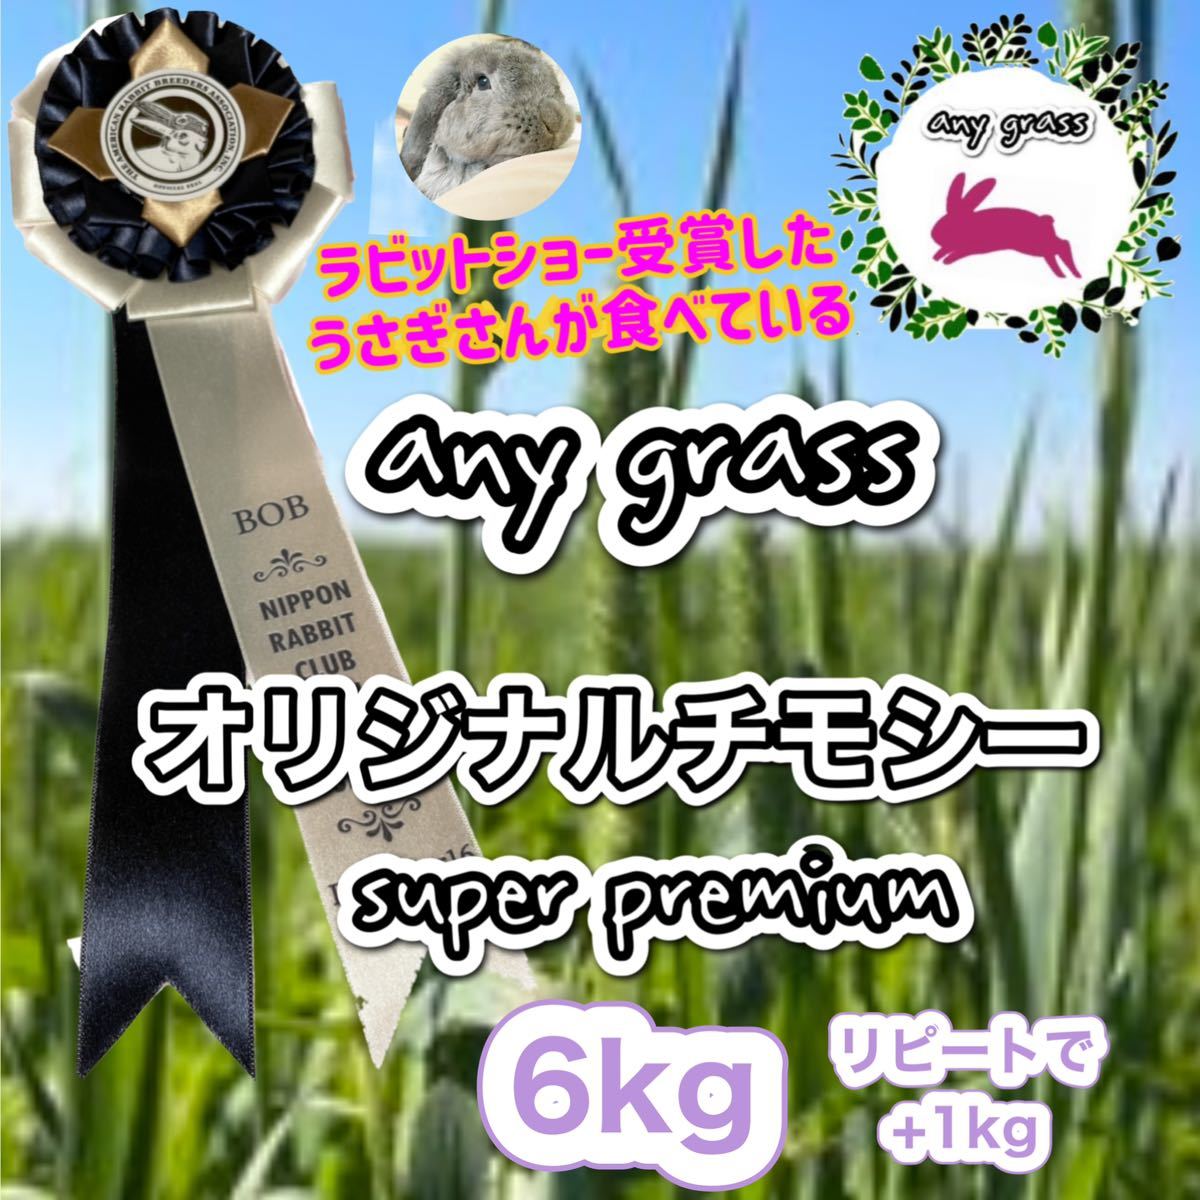 any grass оригинал chimosi-super premium 6kg повтор .+1kg